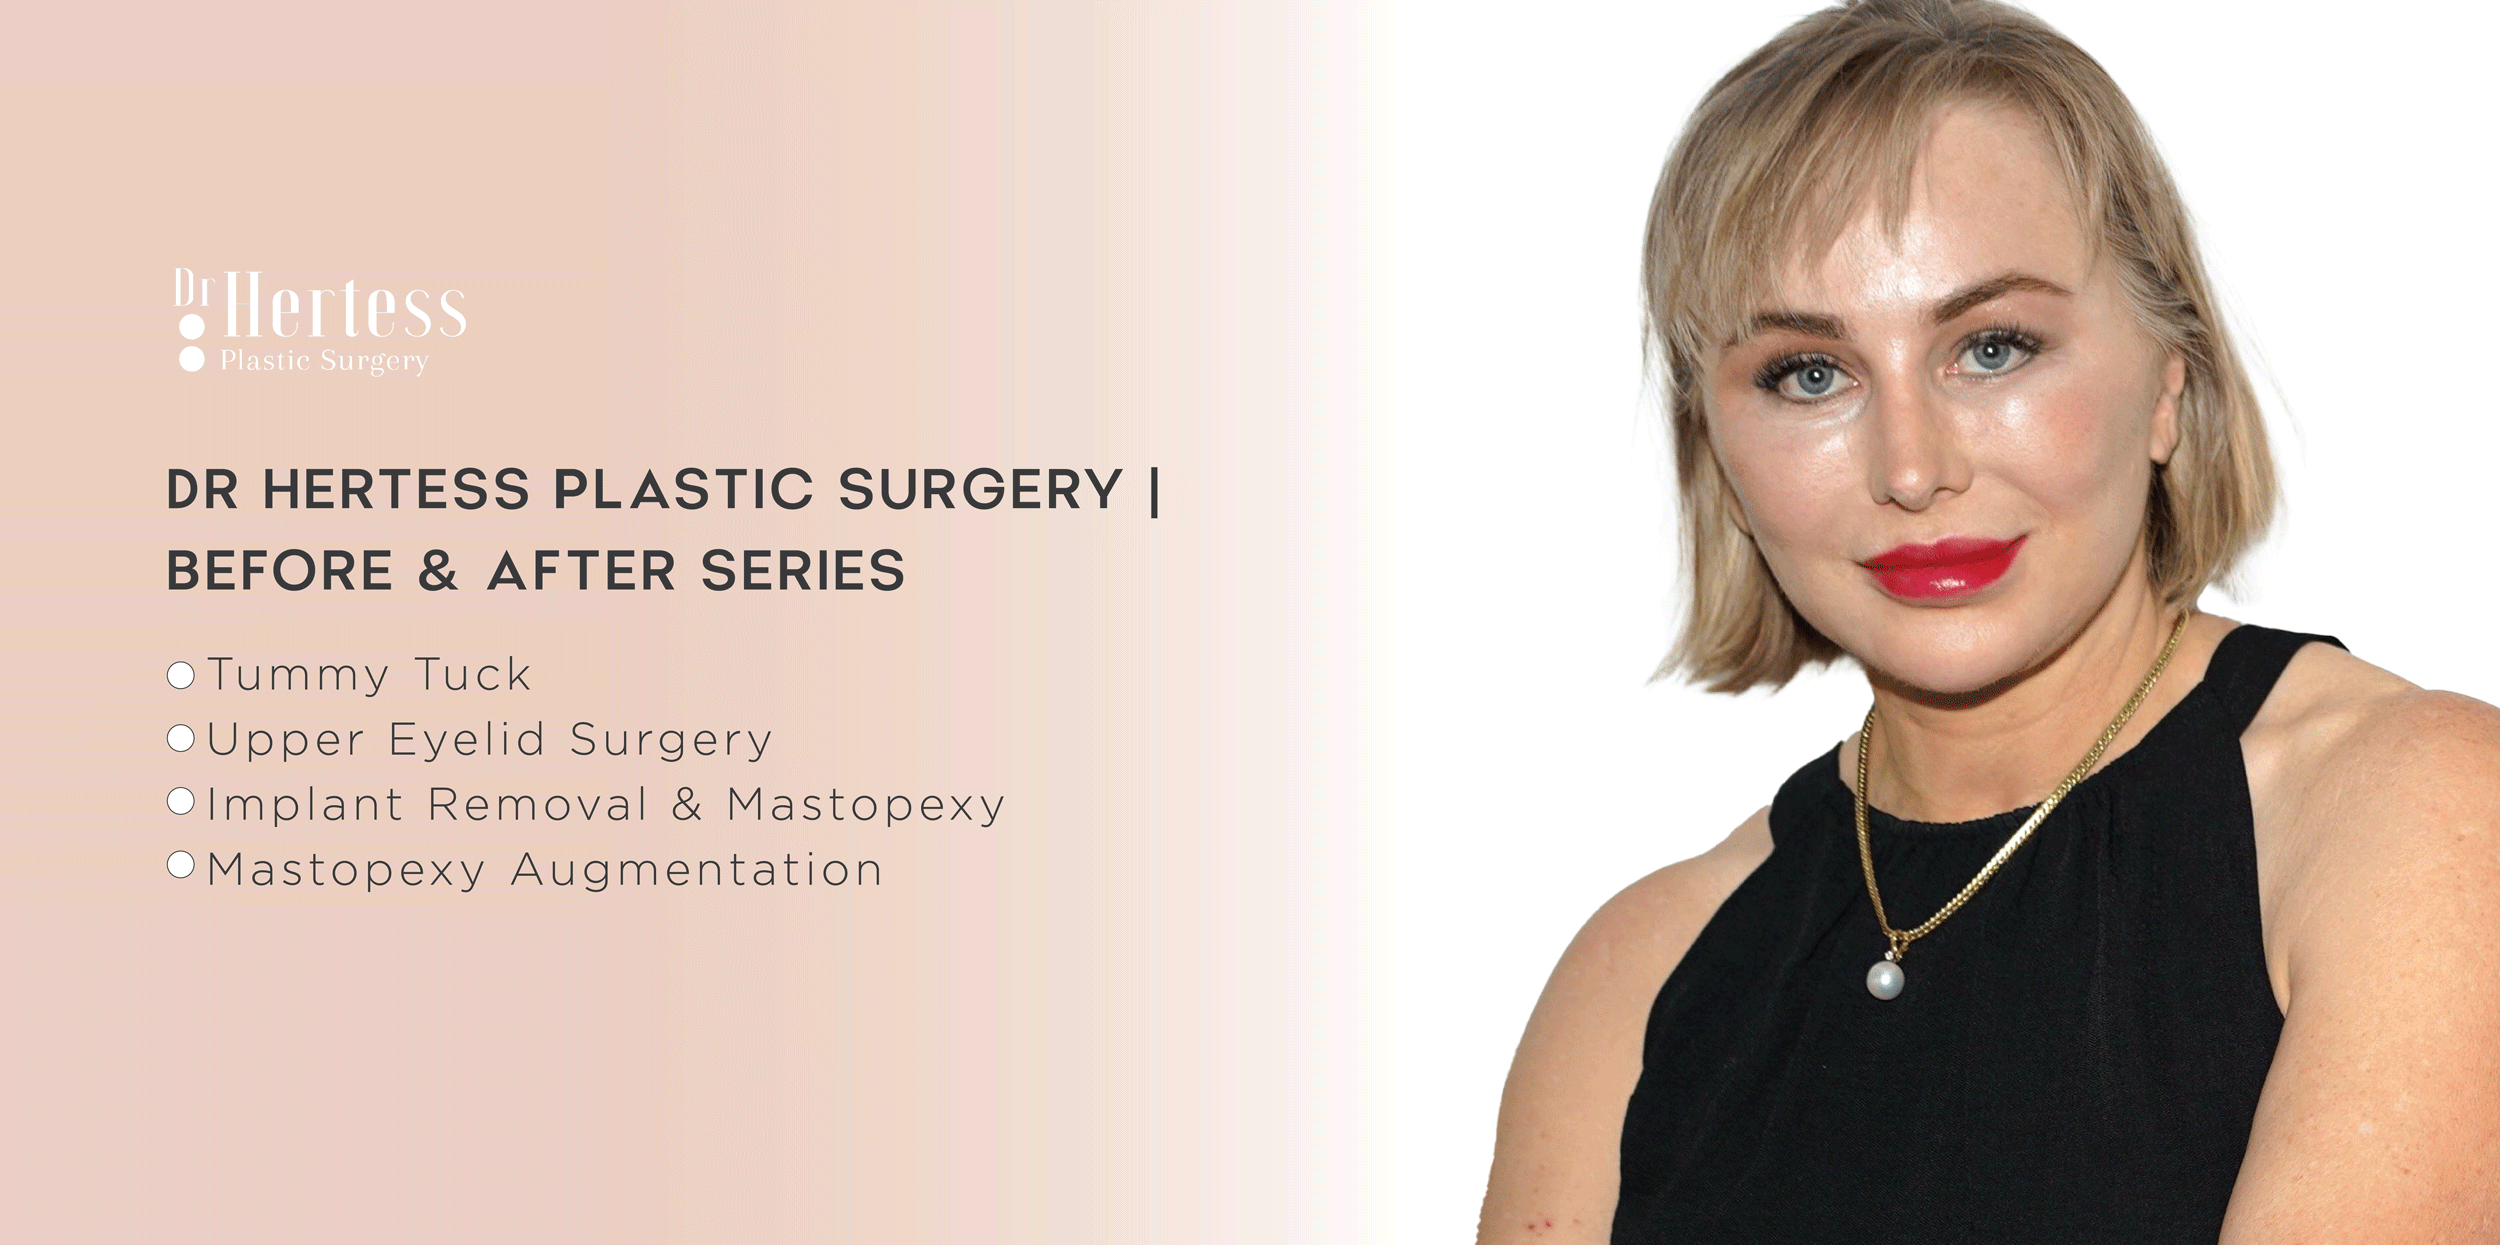 Dr Isolde Hertess of Dr Hertess Plastic Surgery Gold Coast